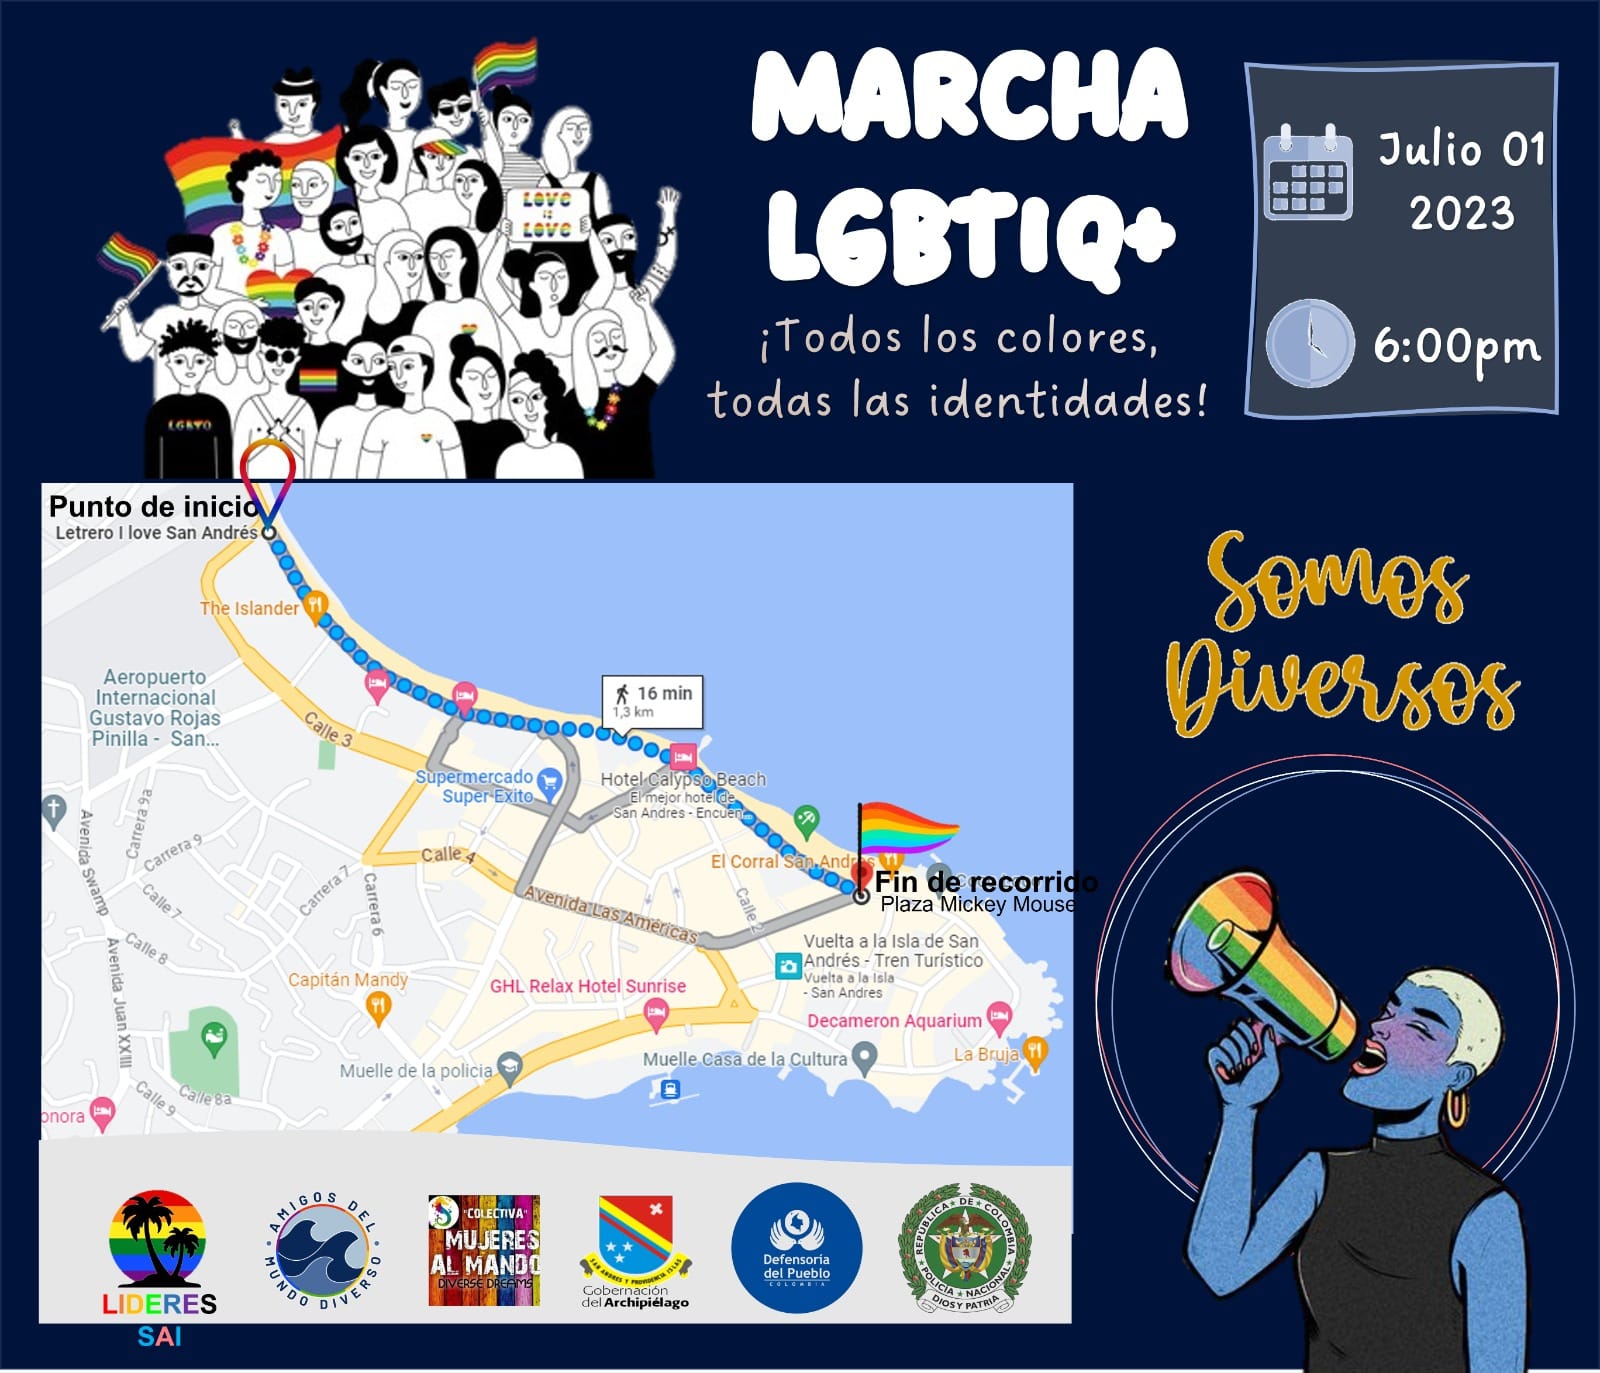 1ª Marcha LGBTIQ+ San Andrés Islas 2023